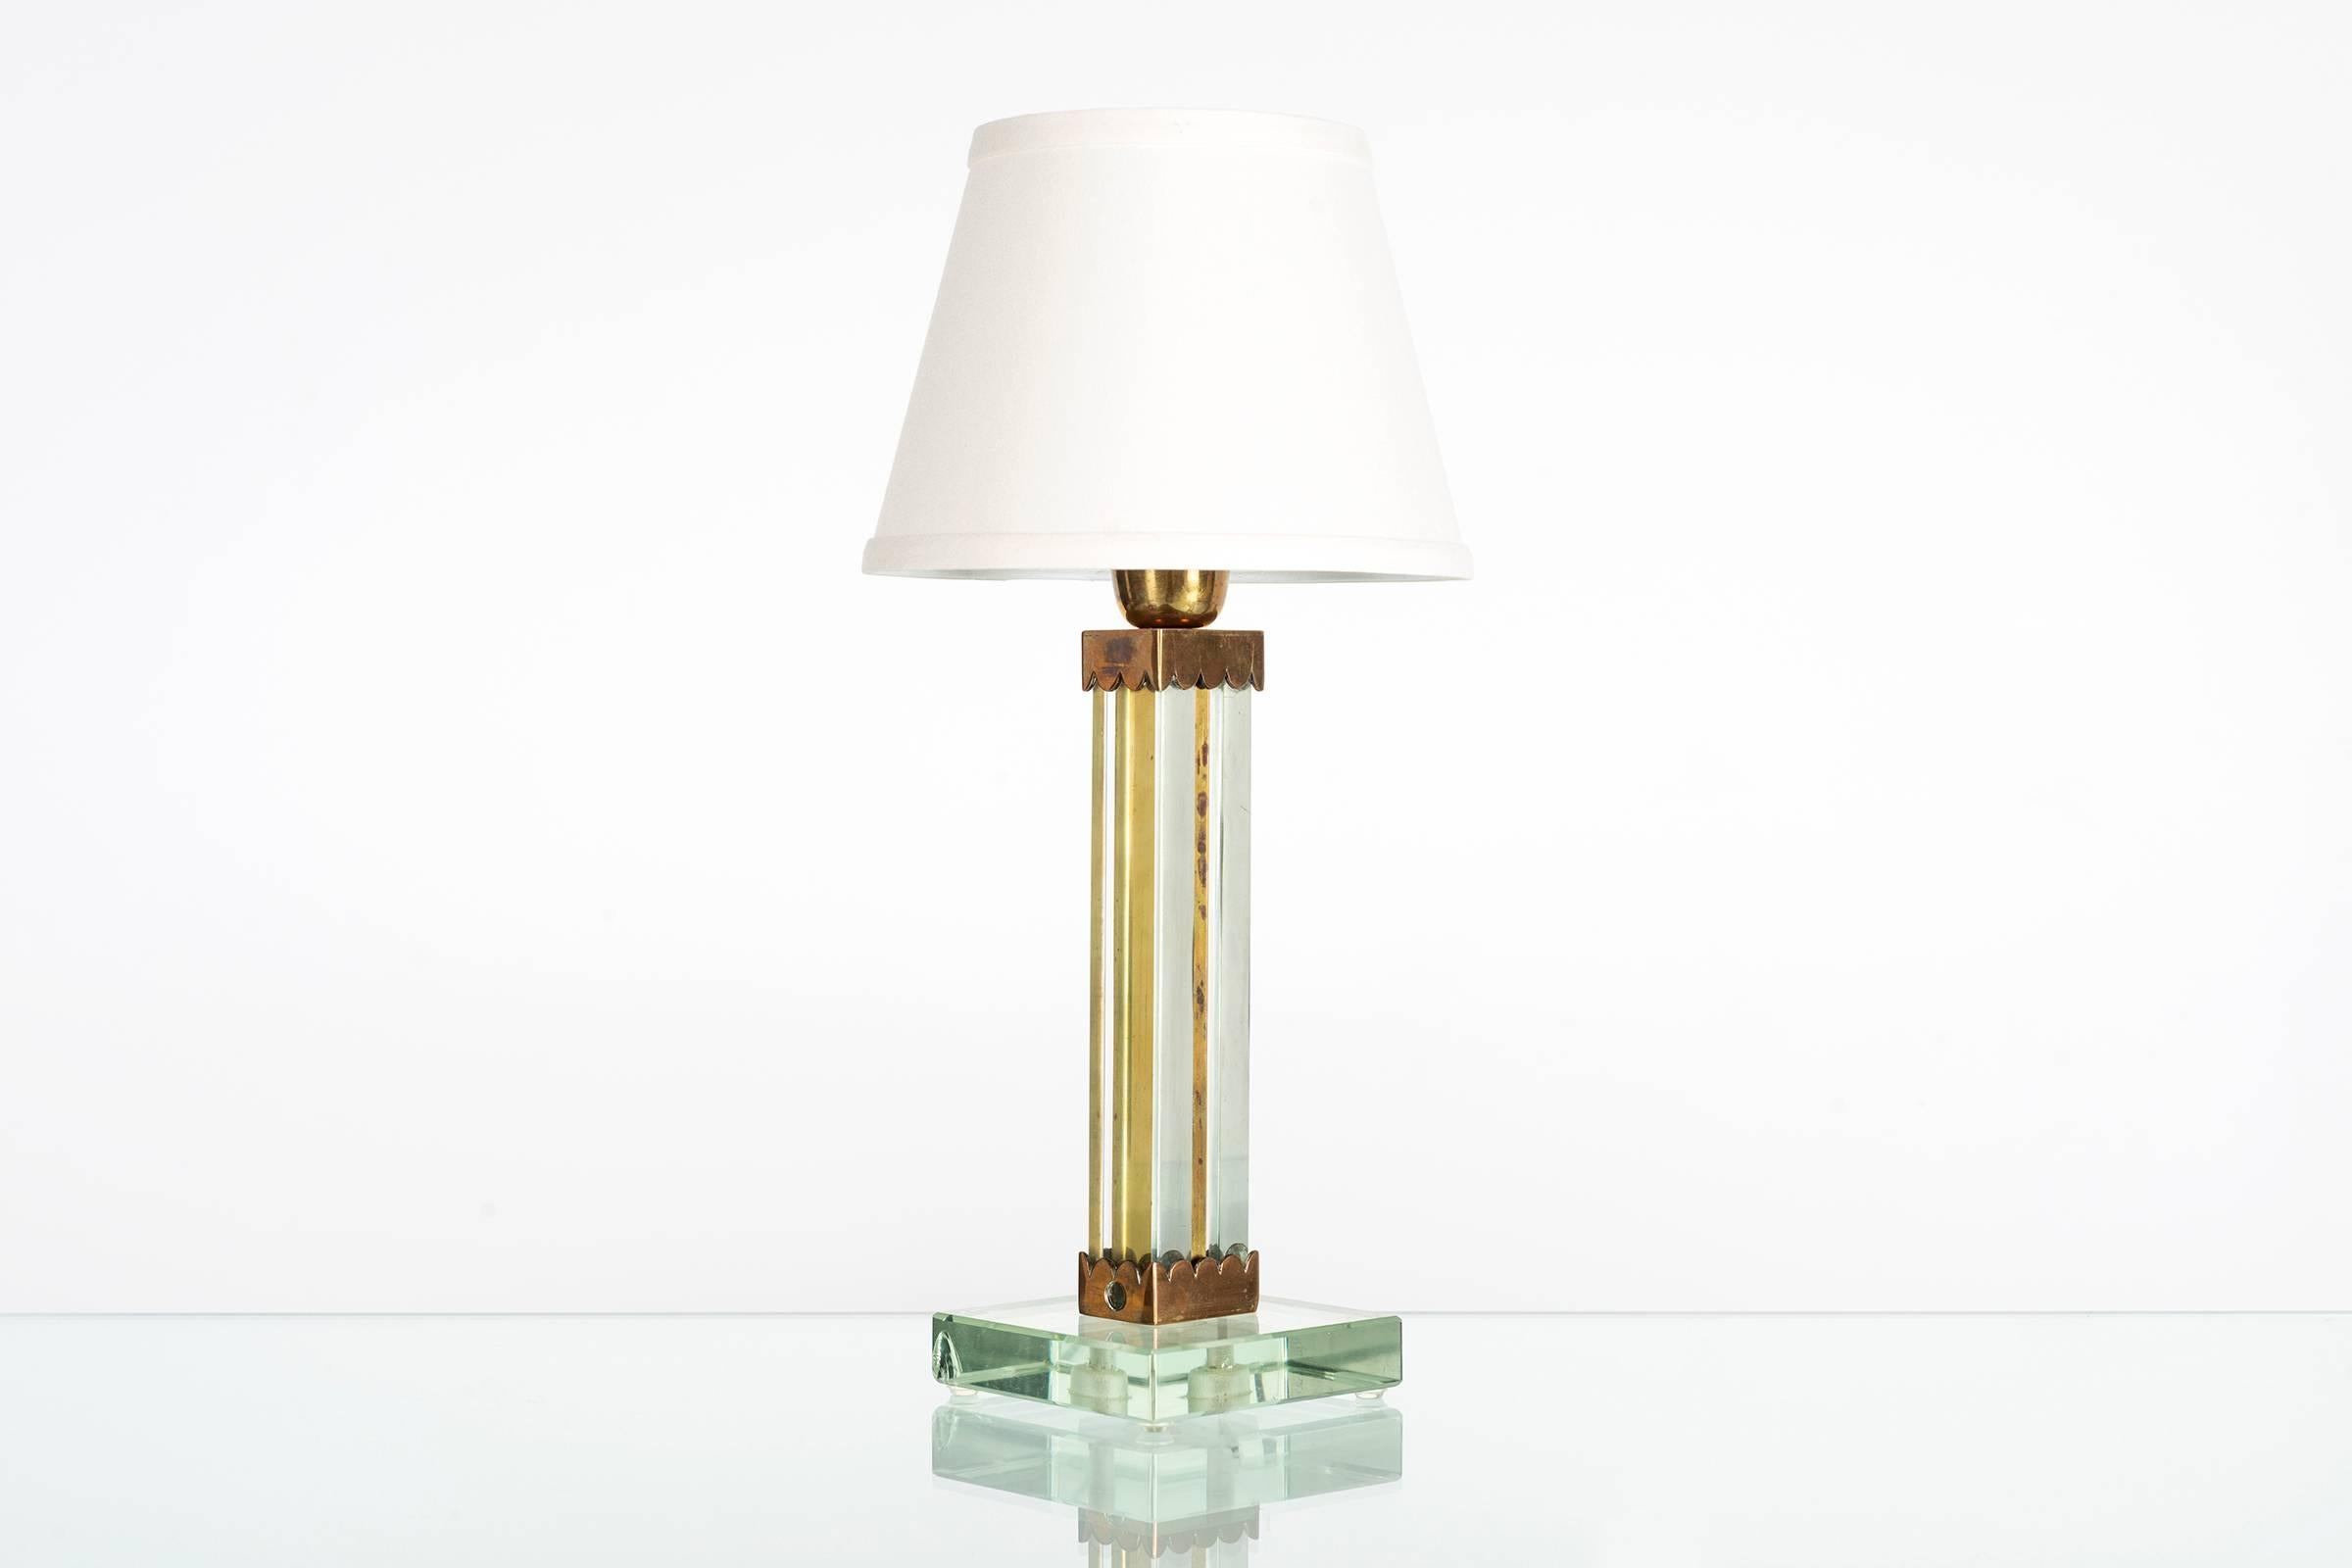 arturo glass table lamp